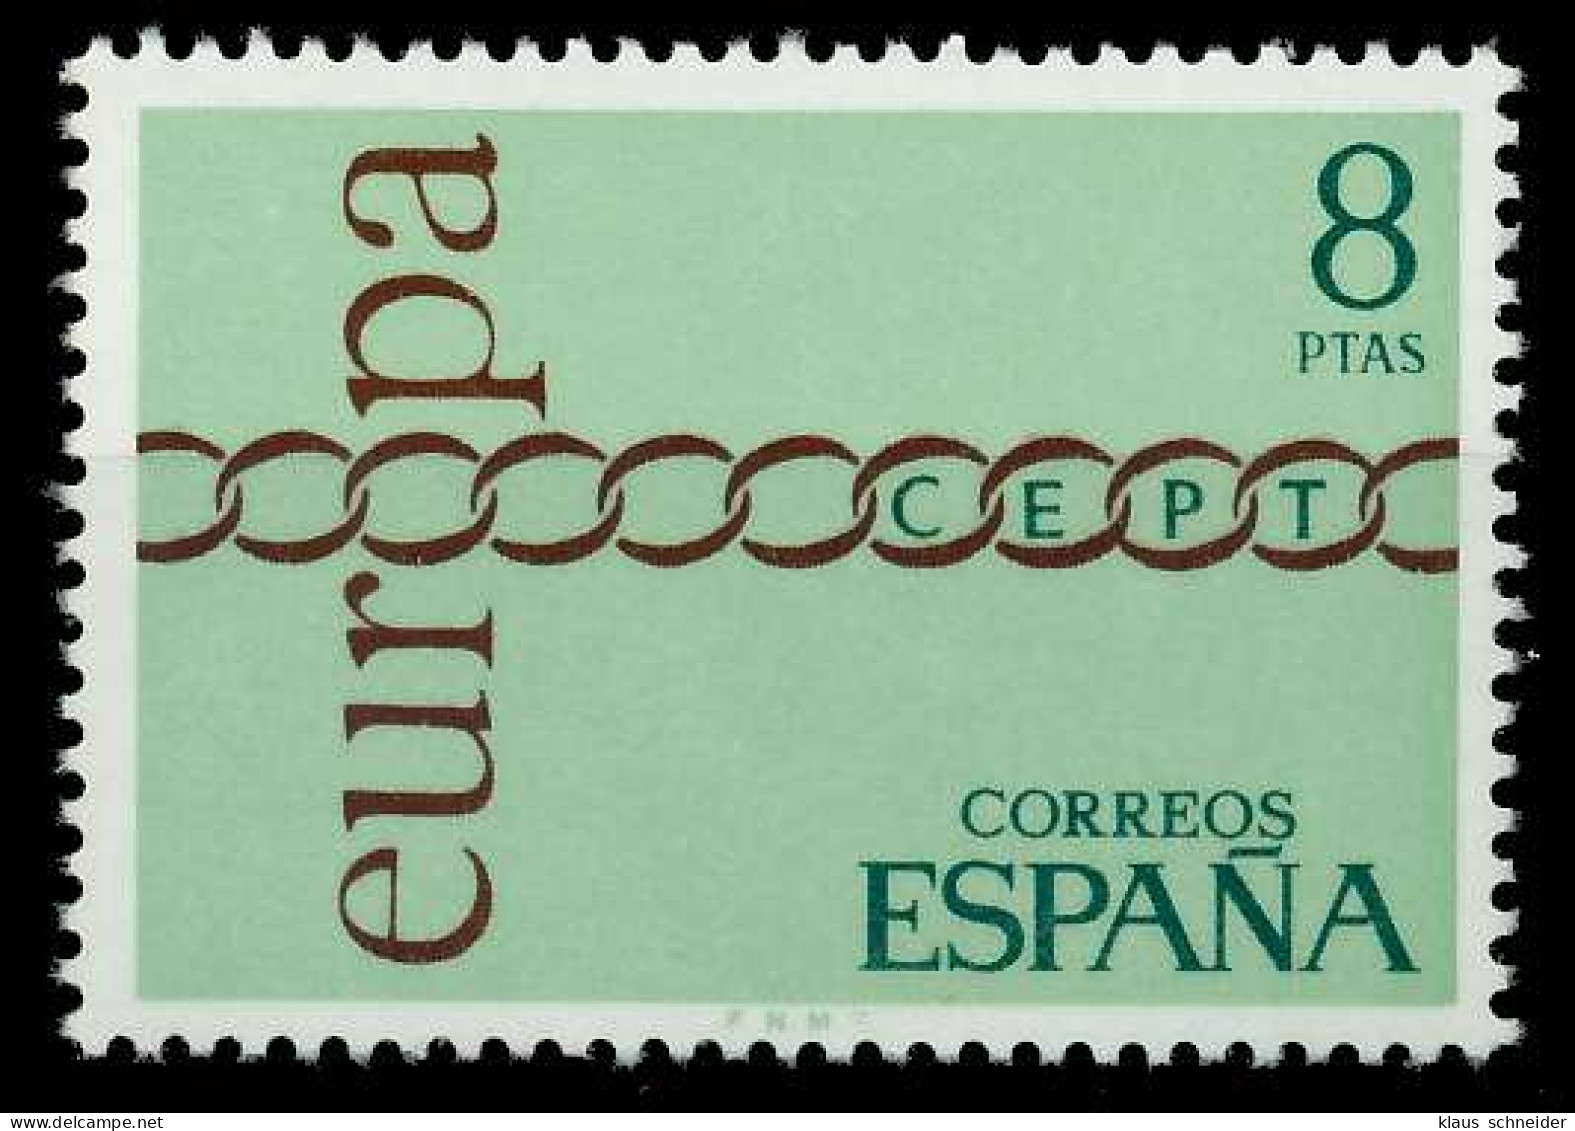 SPANIEN 1971 Nr 1926 Postfrisch SAAA9FE - Unused Stamps